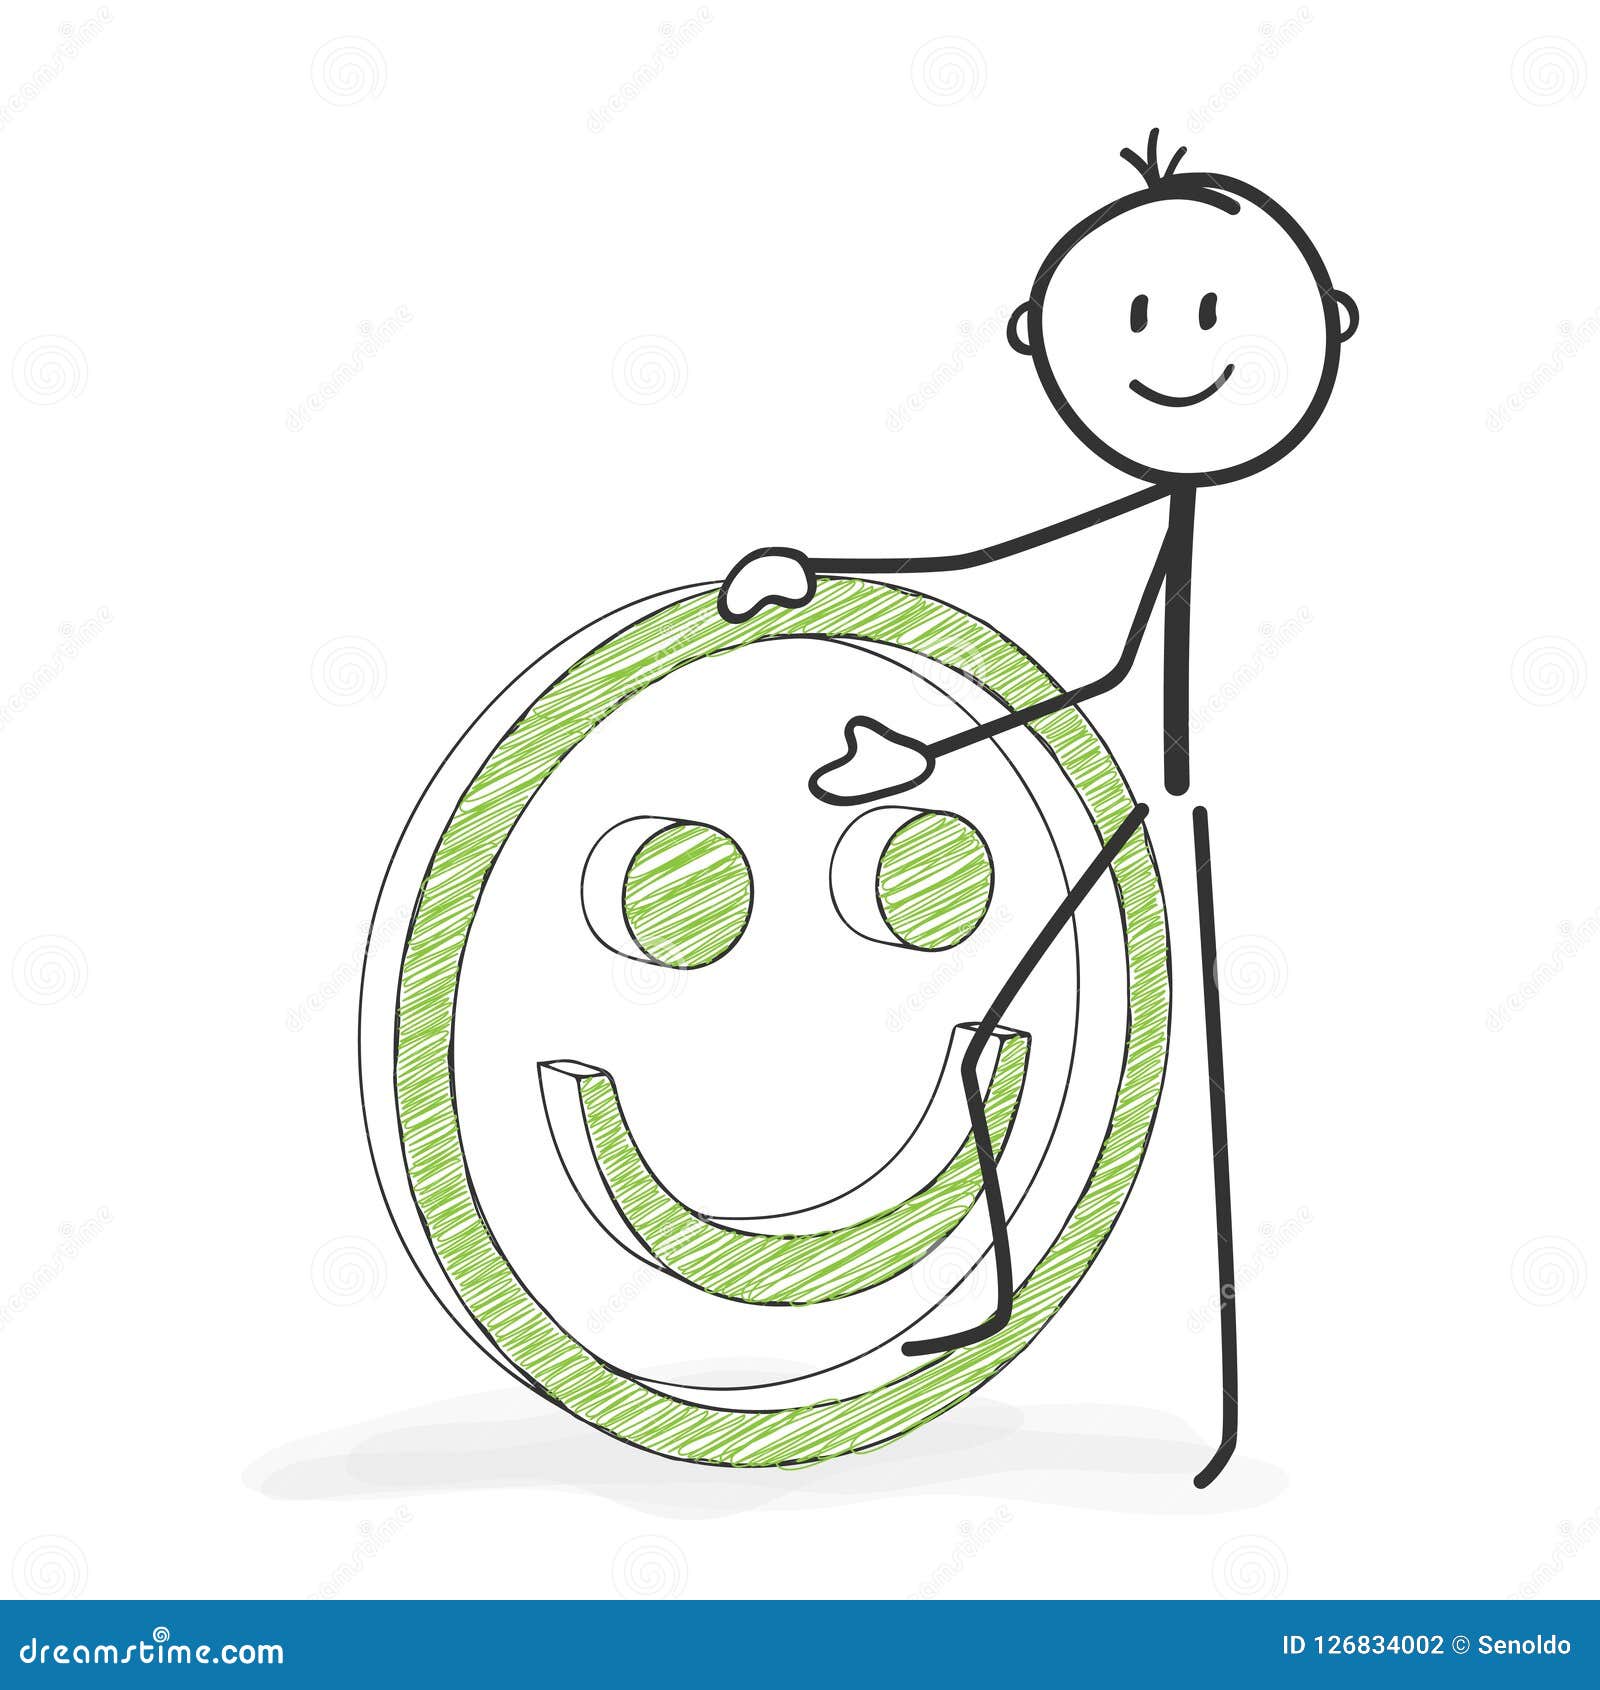 stick figure cartoon - stickman with a positive smiley icon